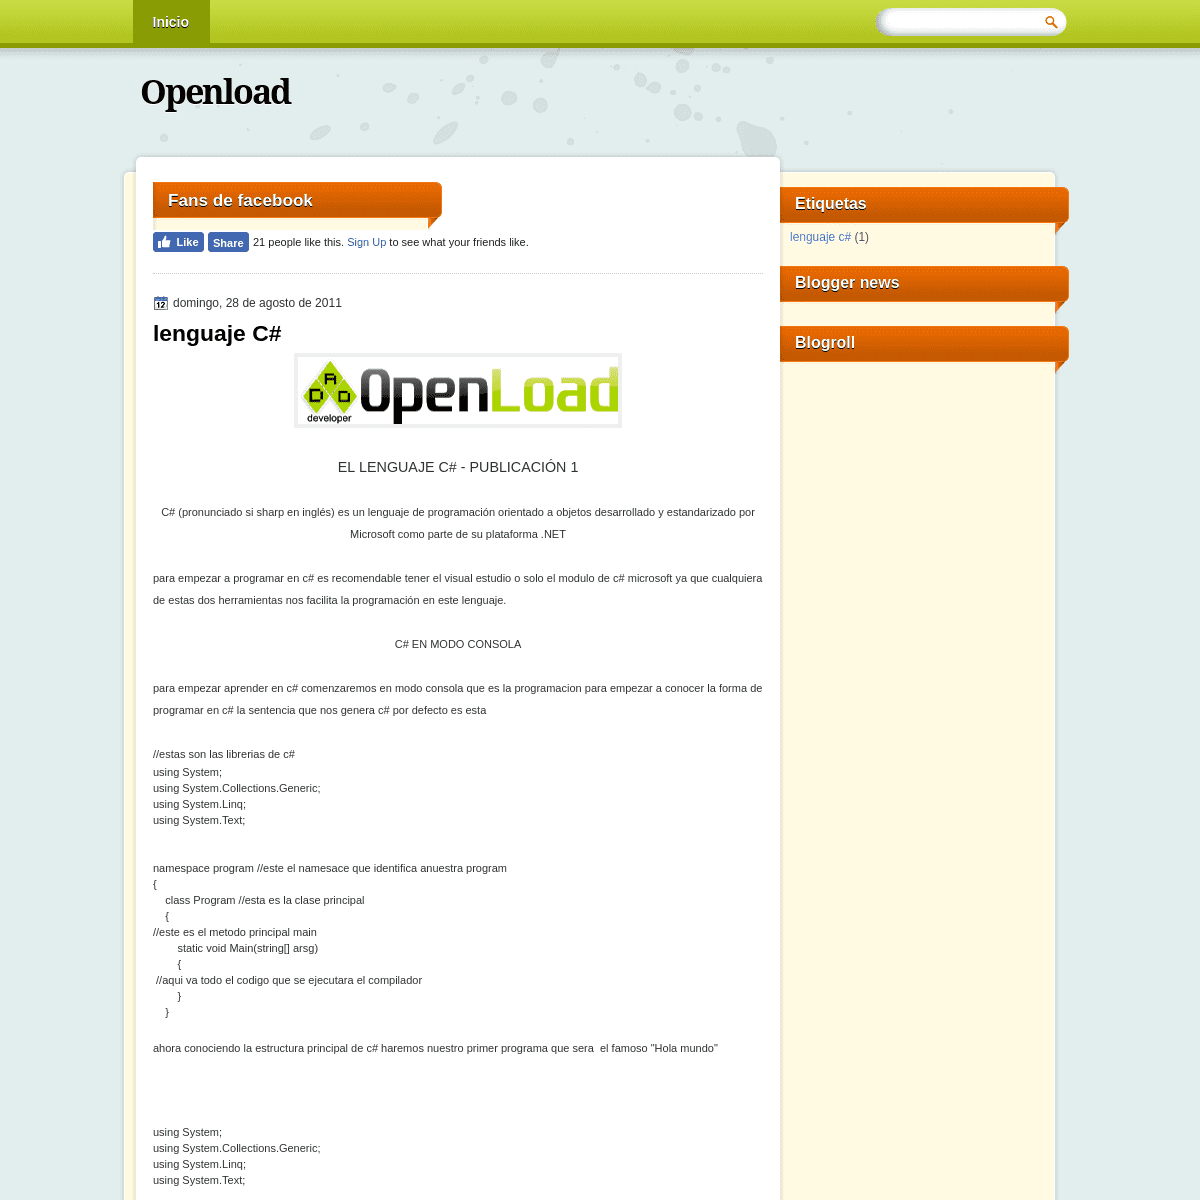 A complete backup of openload2.blogspot.com